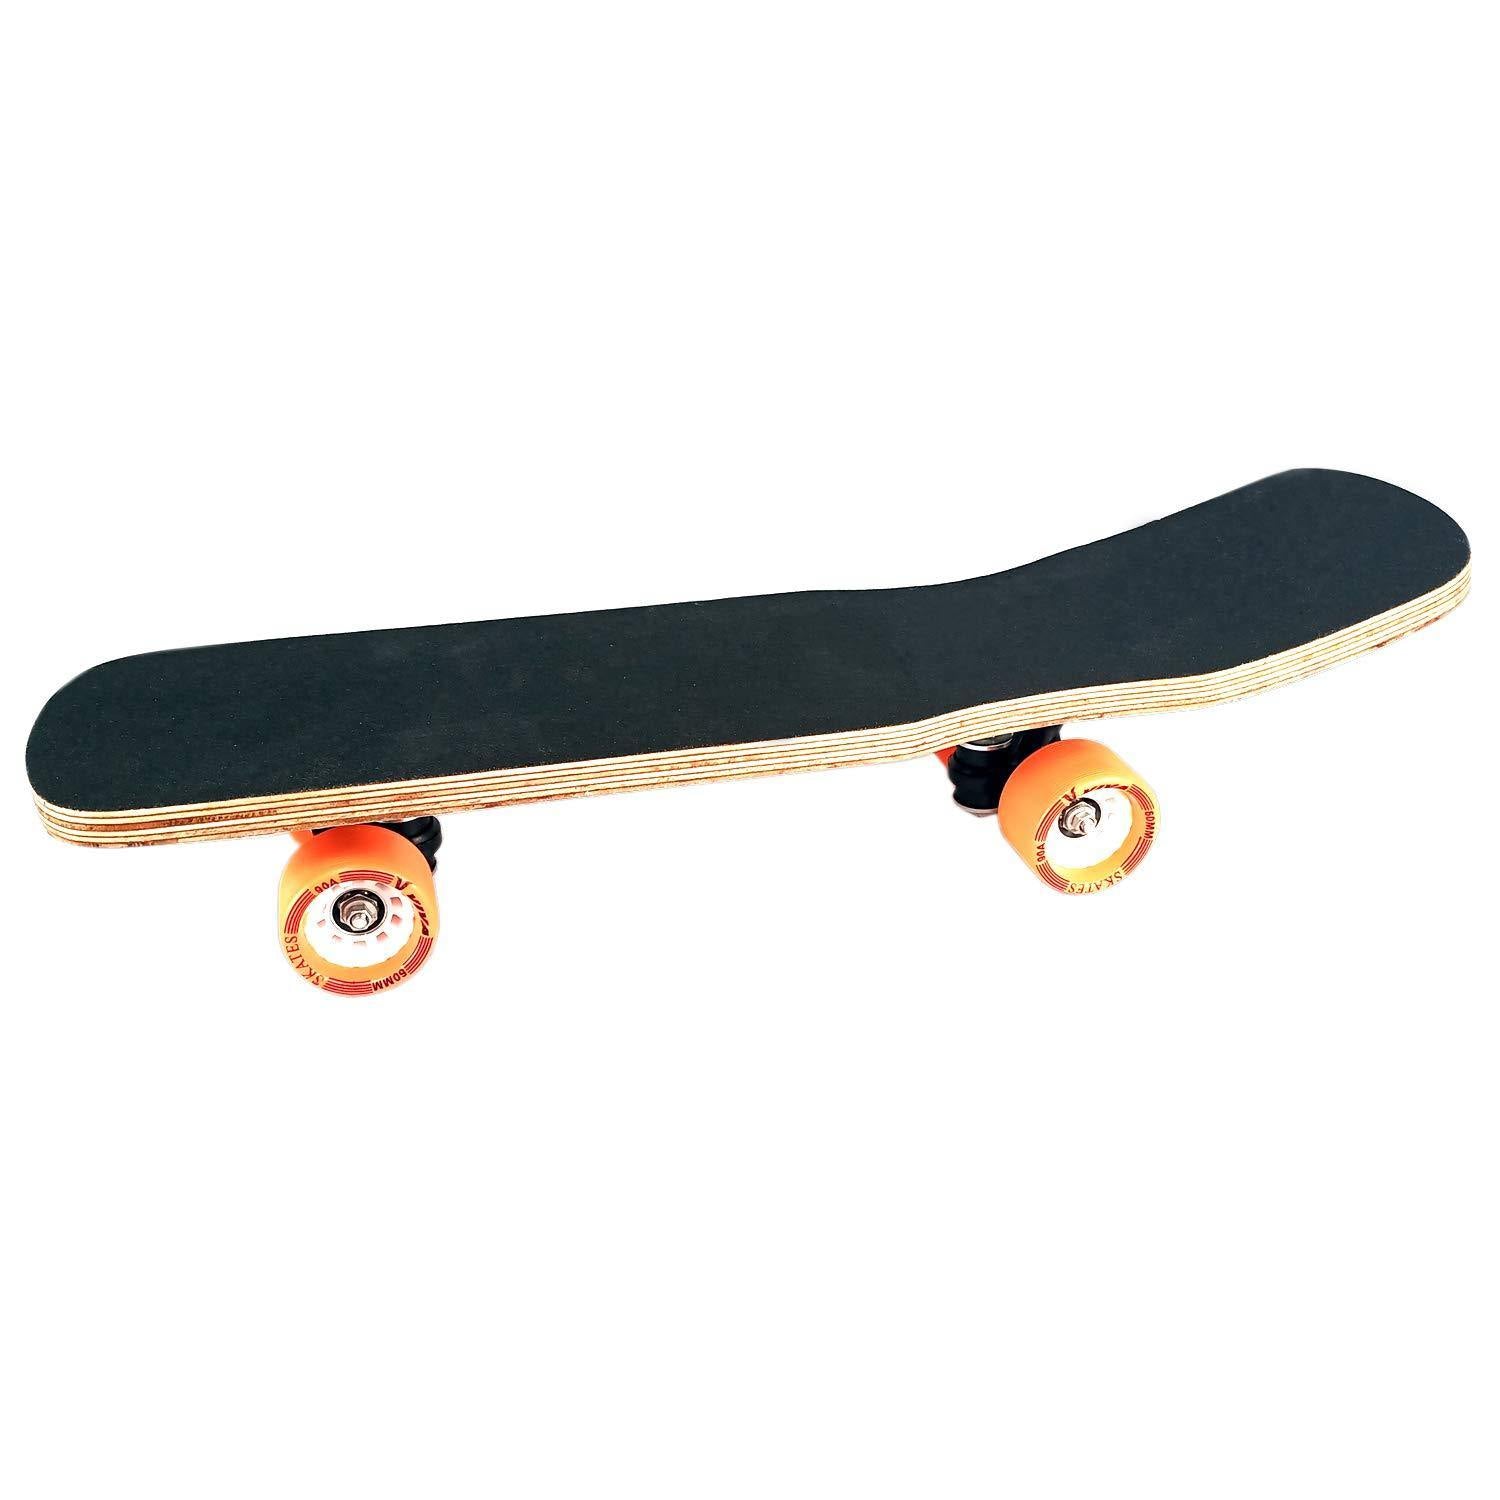 VIVA Wooden Skateboard With Anti Skid Surface - Junior - Best Price online Prokicksports.com